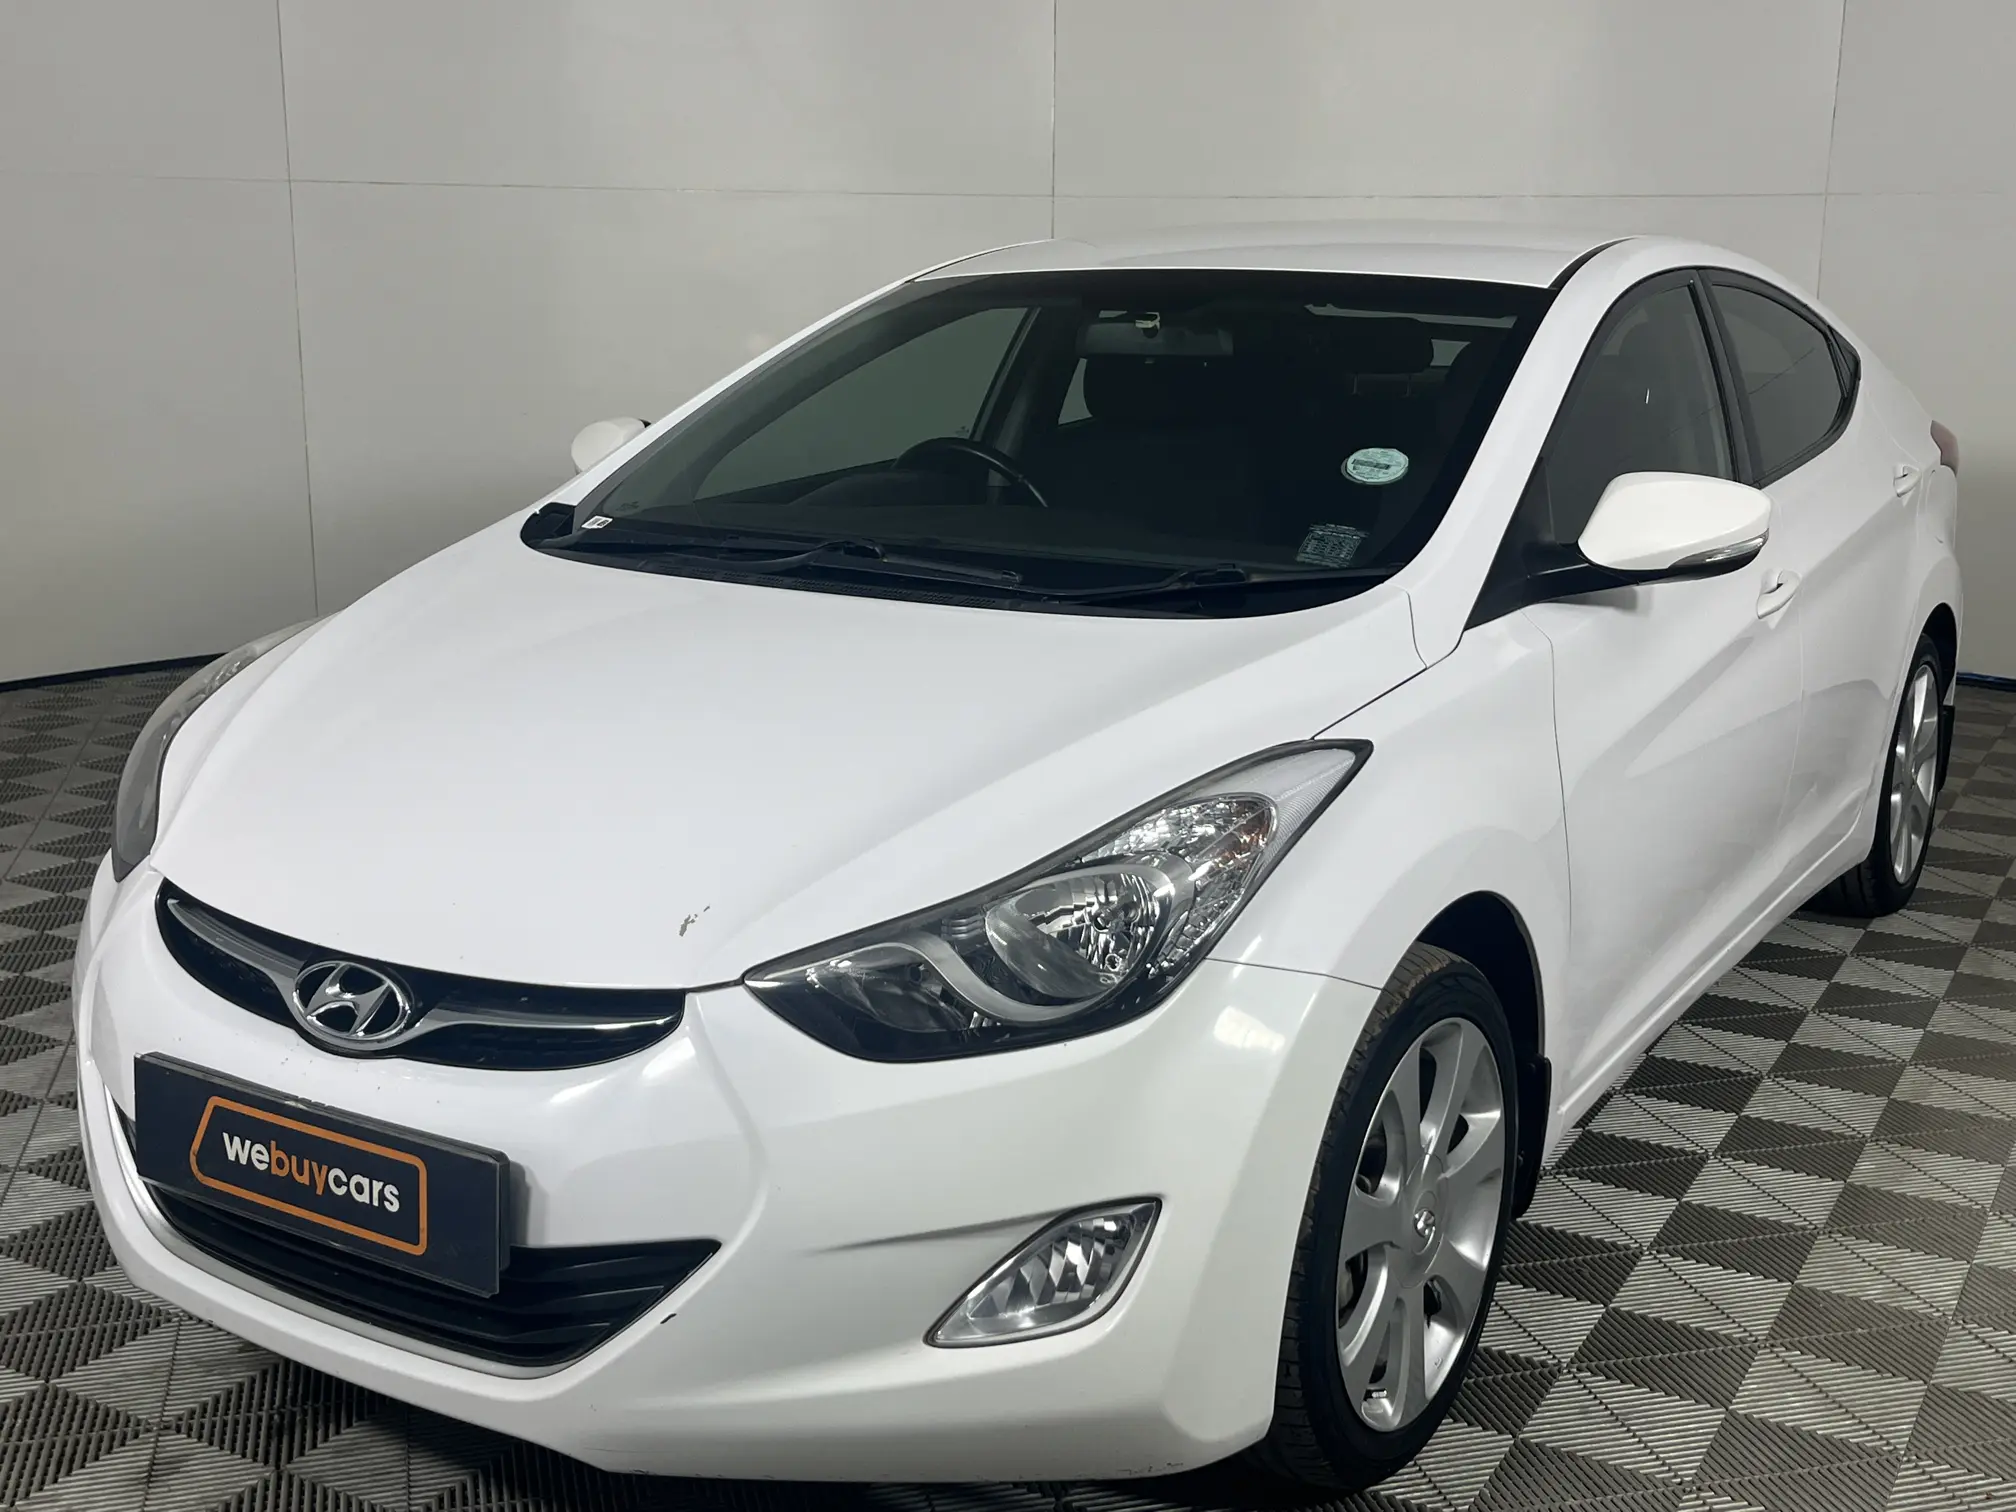 2015 Hyundai Elantra 1.8 Gls/executive